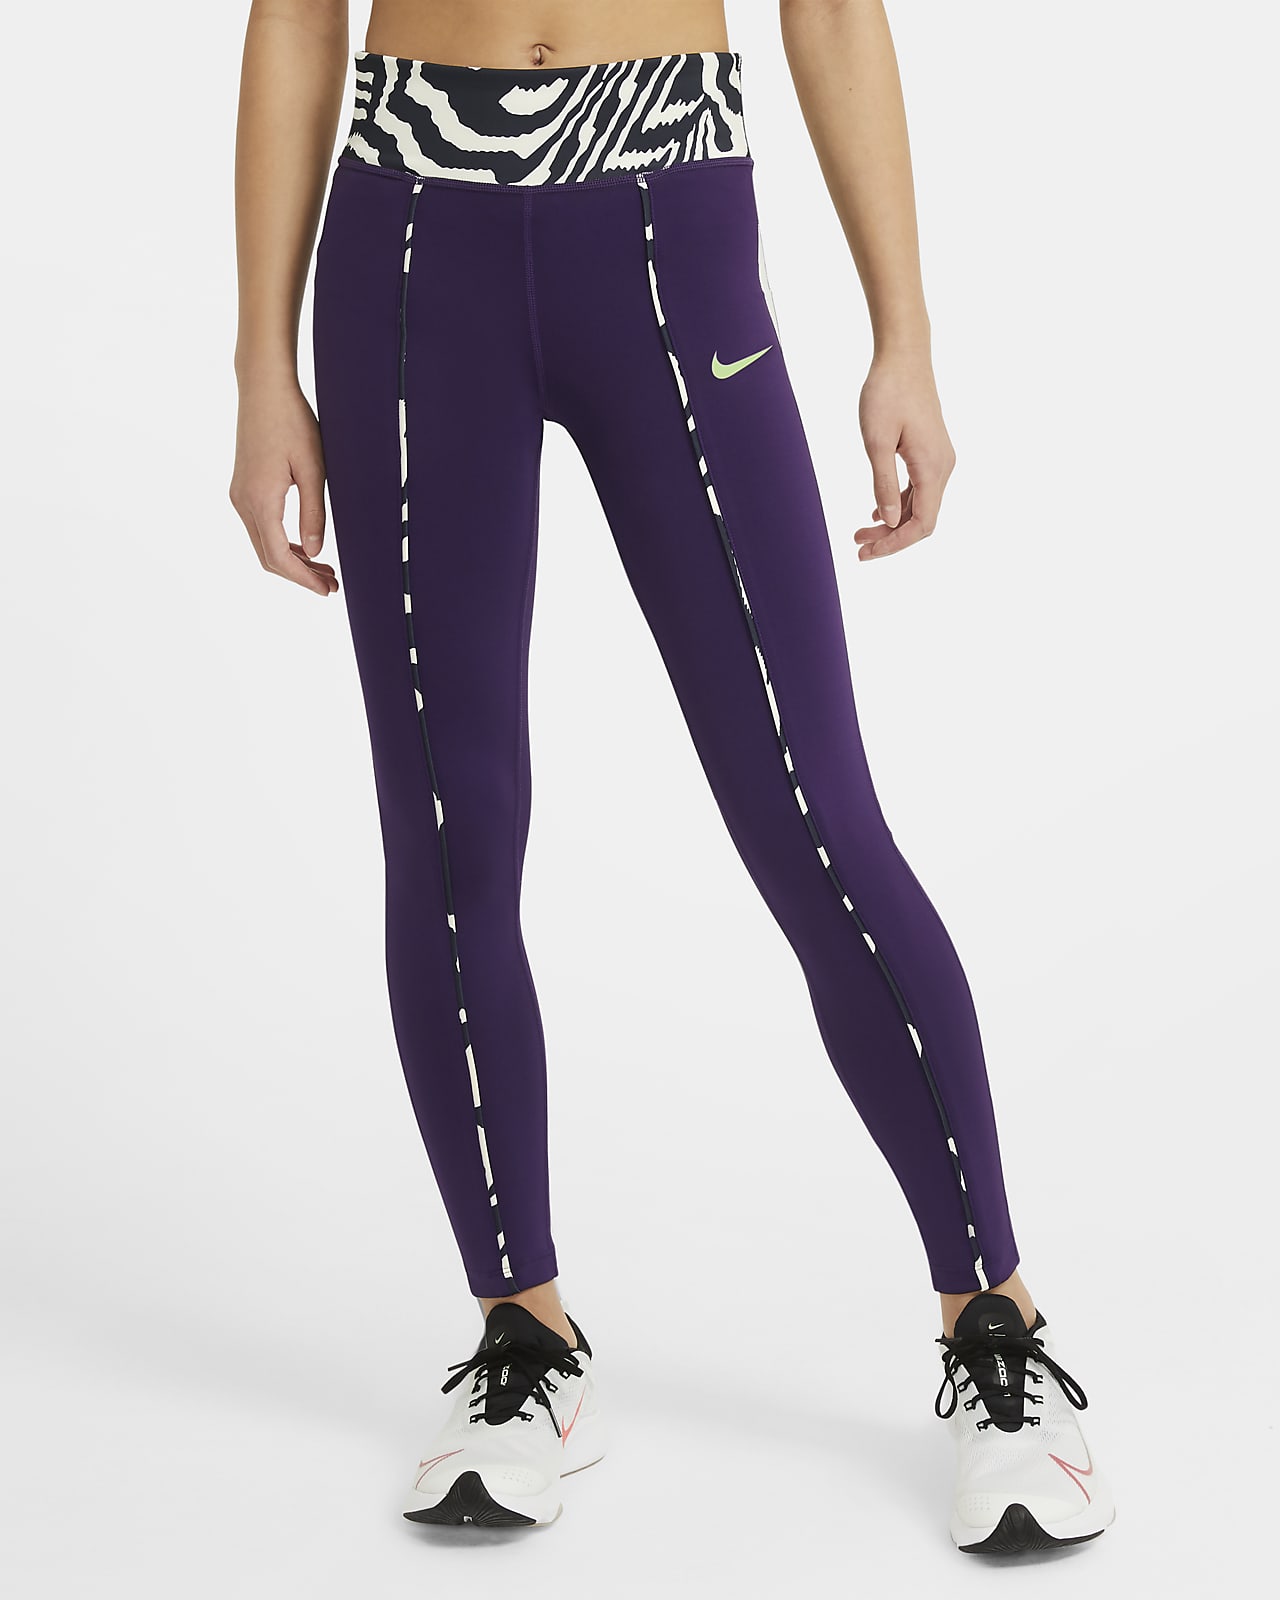 purple leggings nike